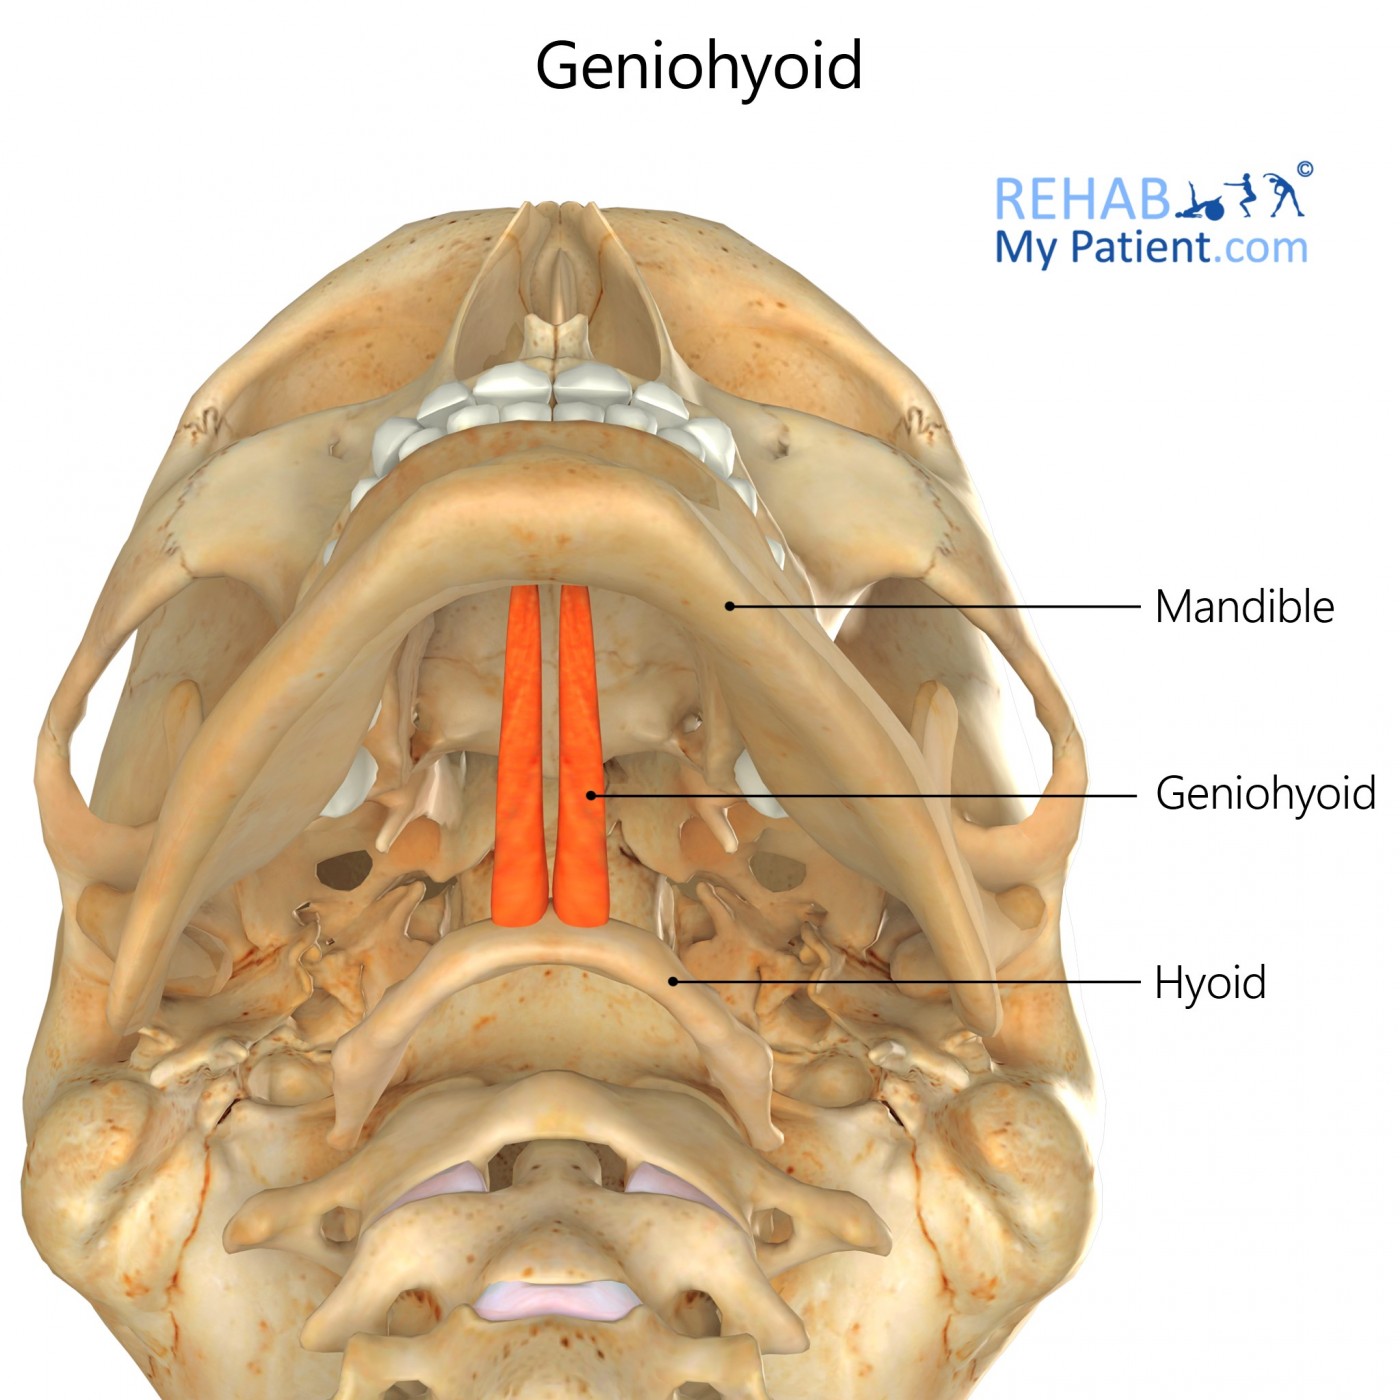 Geniohyoid (chin)